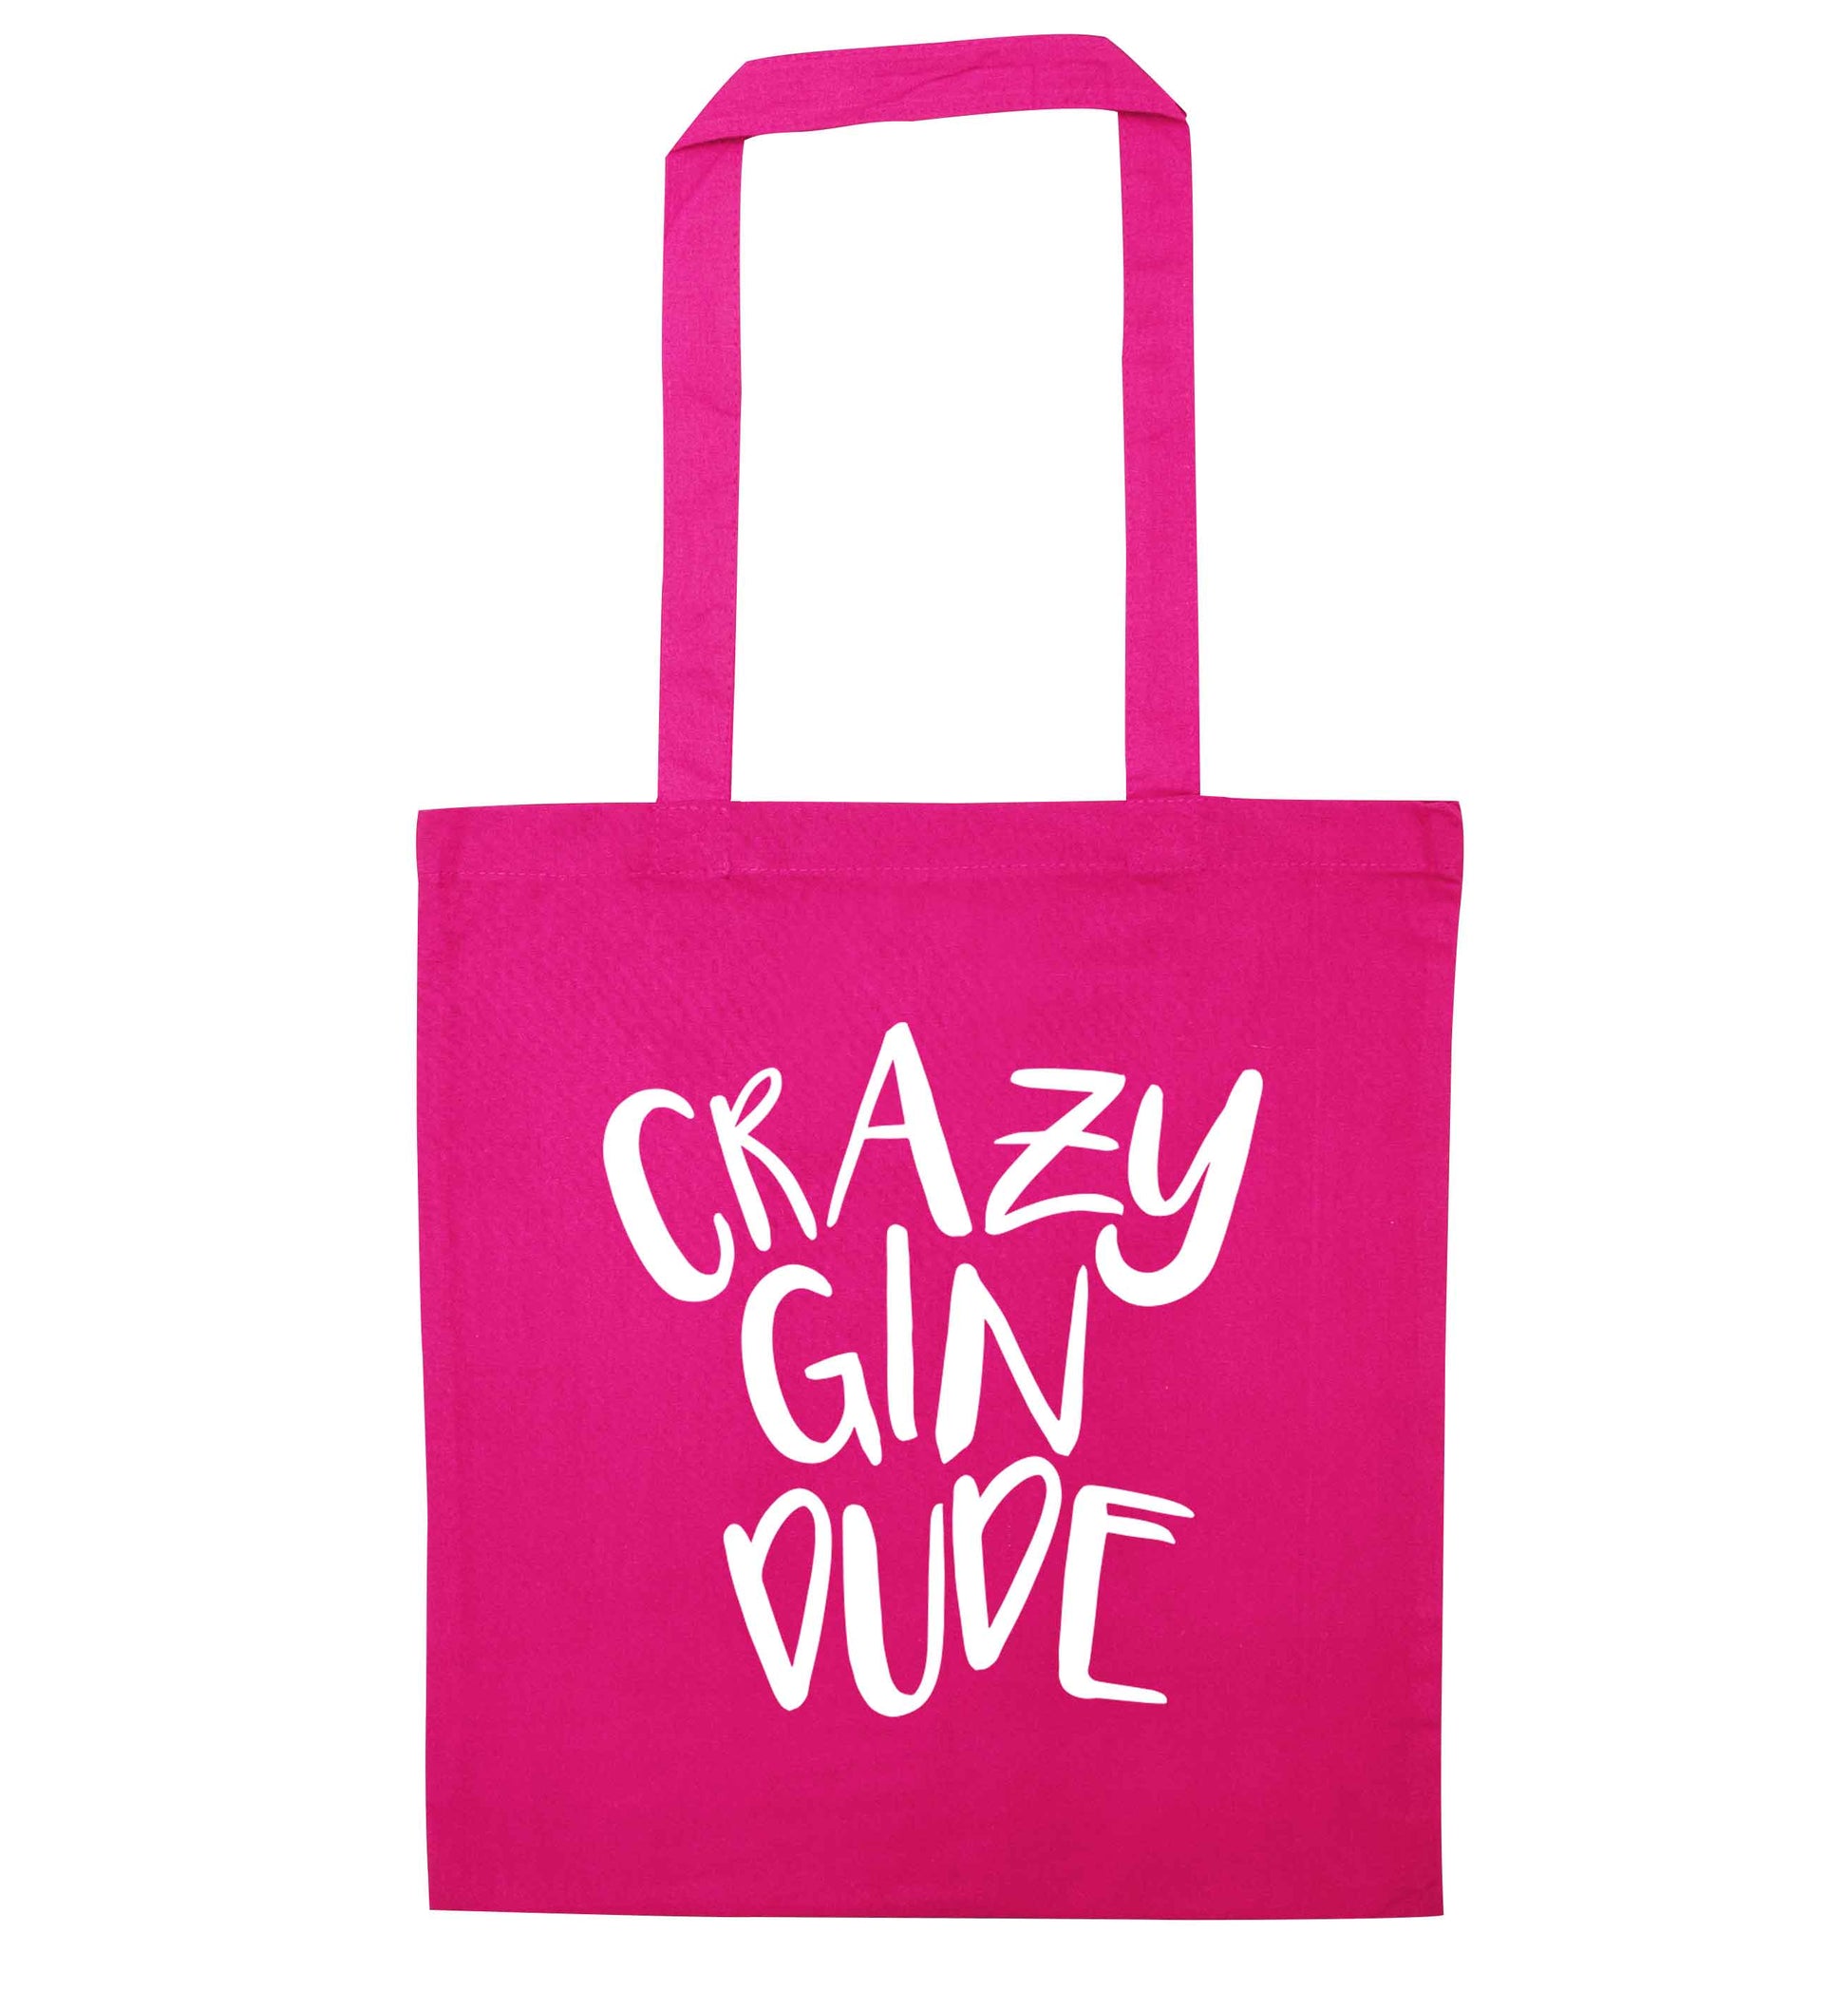 Crazy gin dude pink tote bag